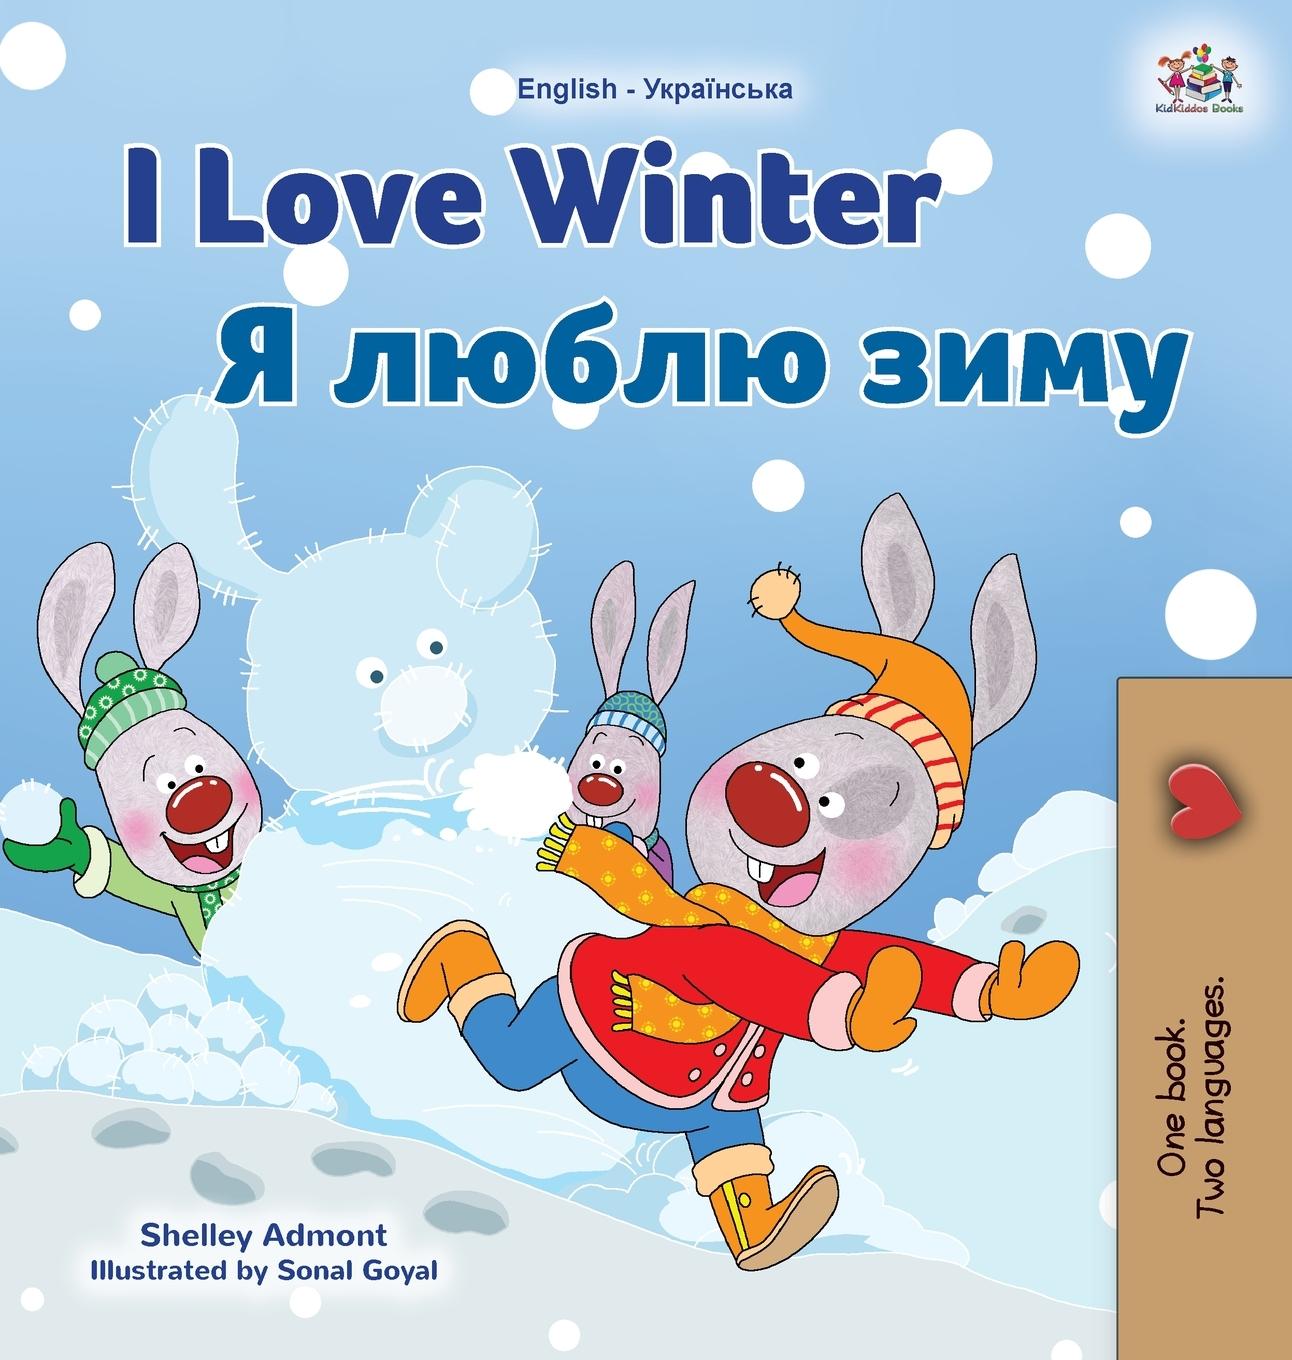 Carte I Love Winter (English Ukrainian Bilingual Book for Kids) Kidkiddos Books